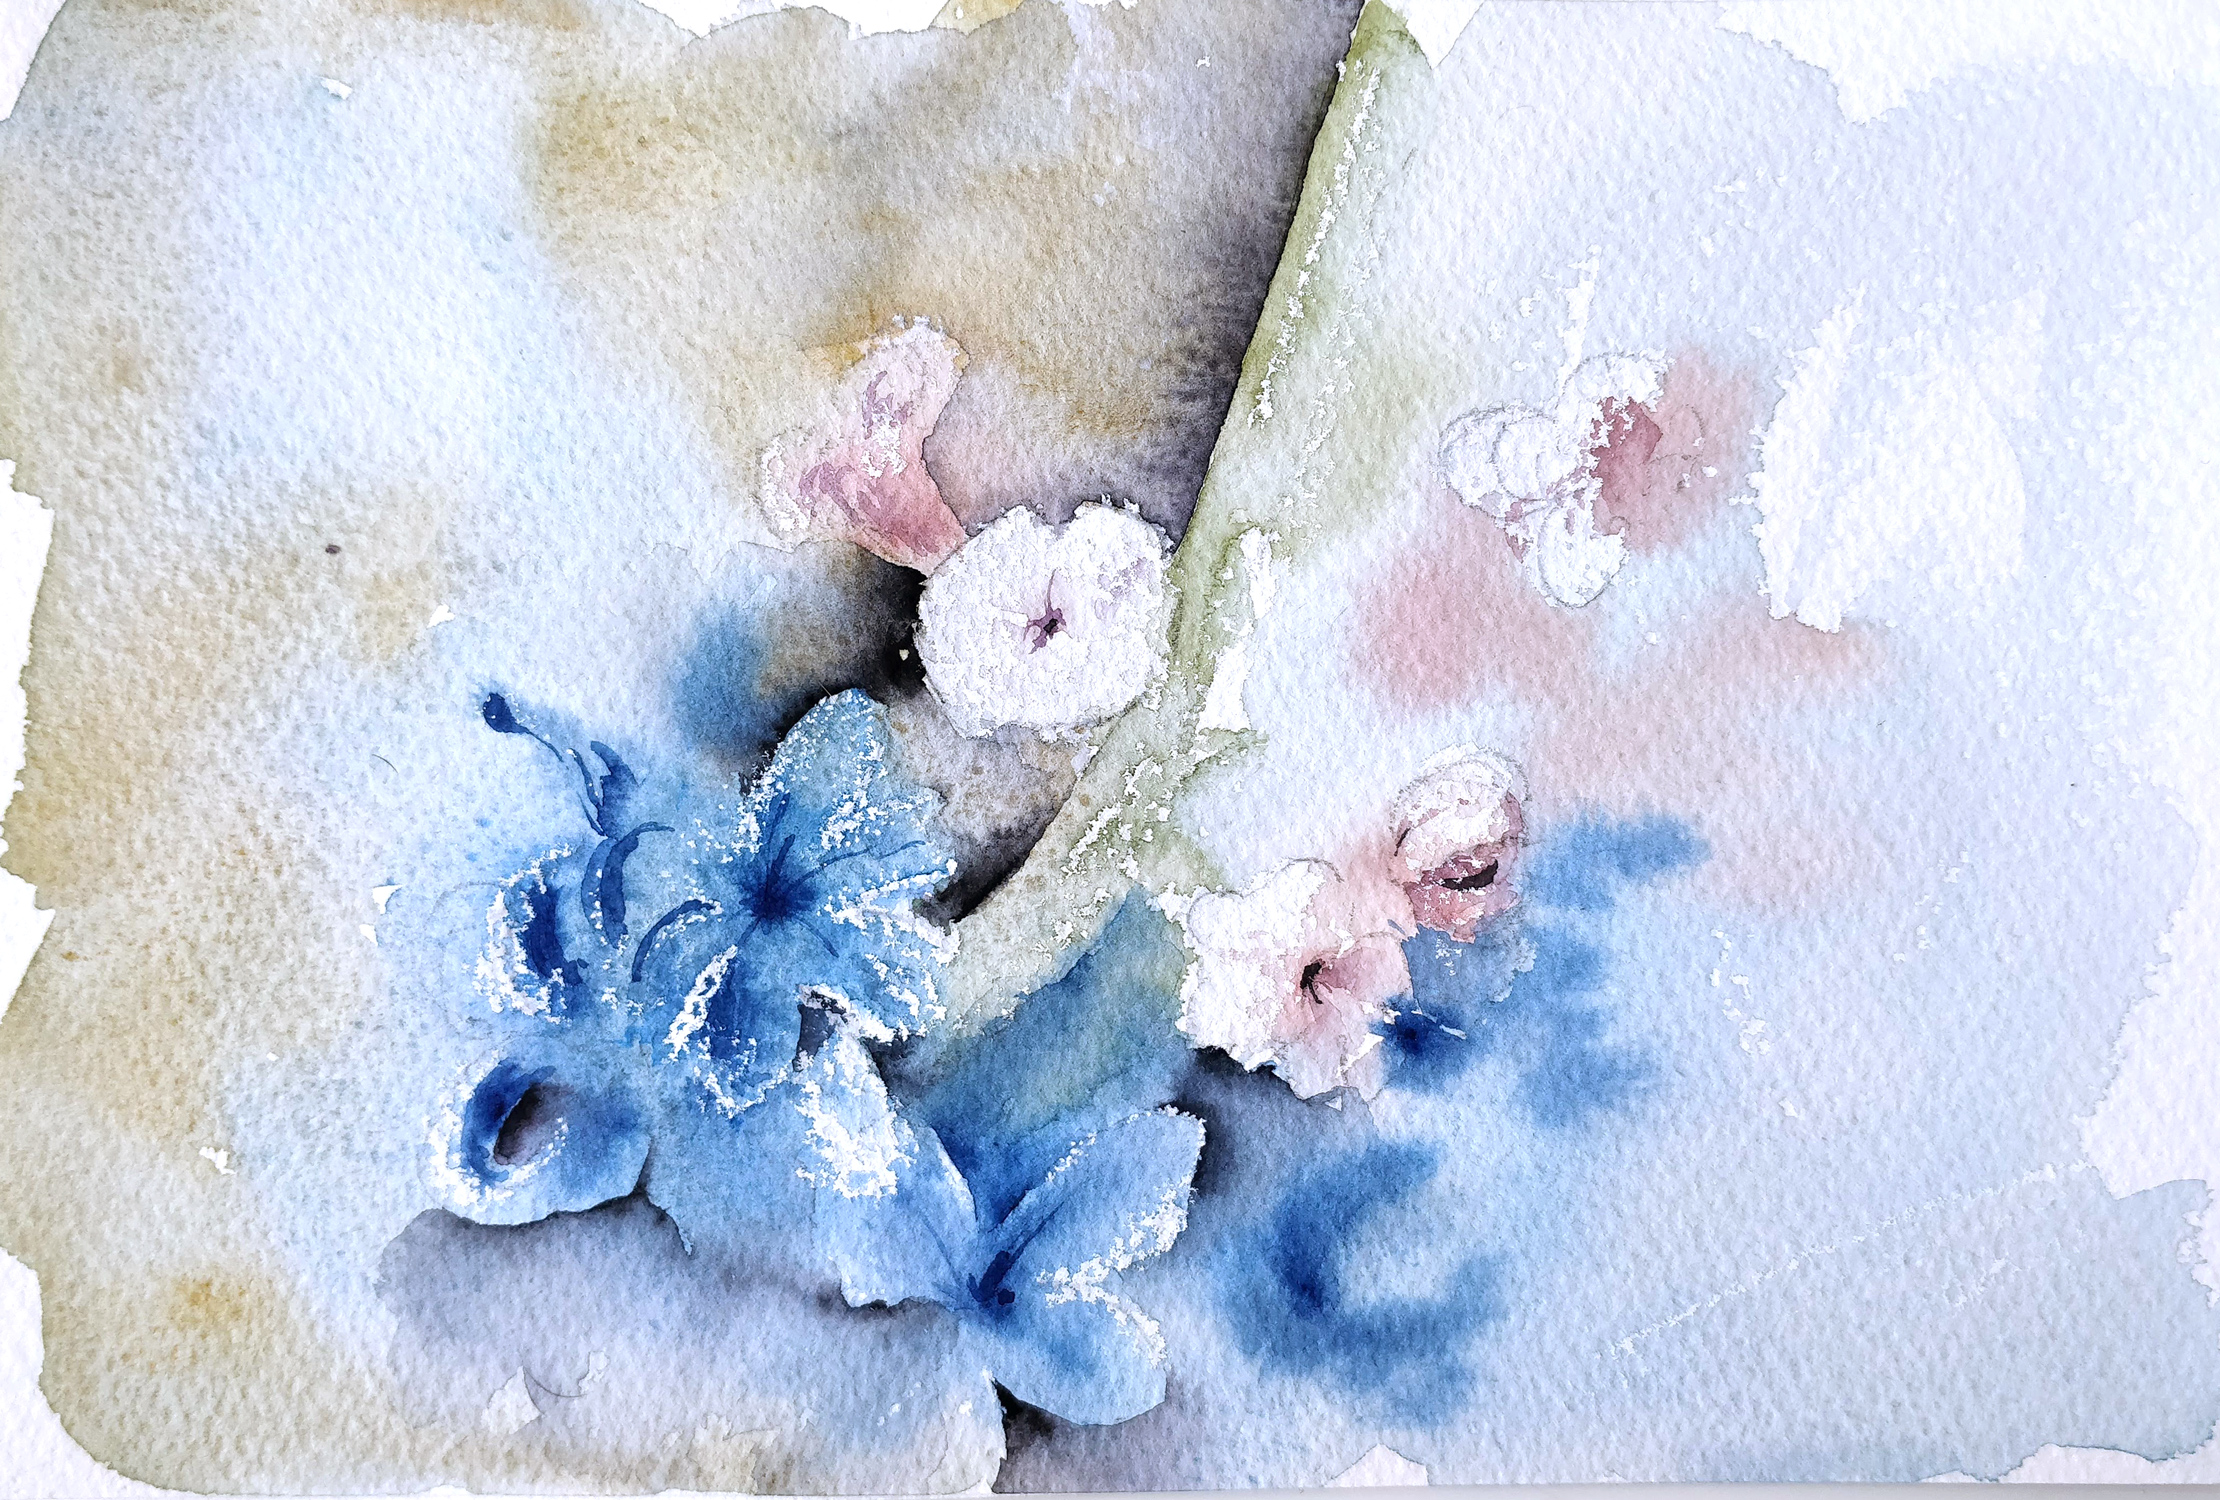 White flowers in watercolor - Ursula Schichan